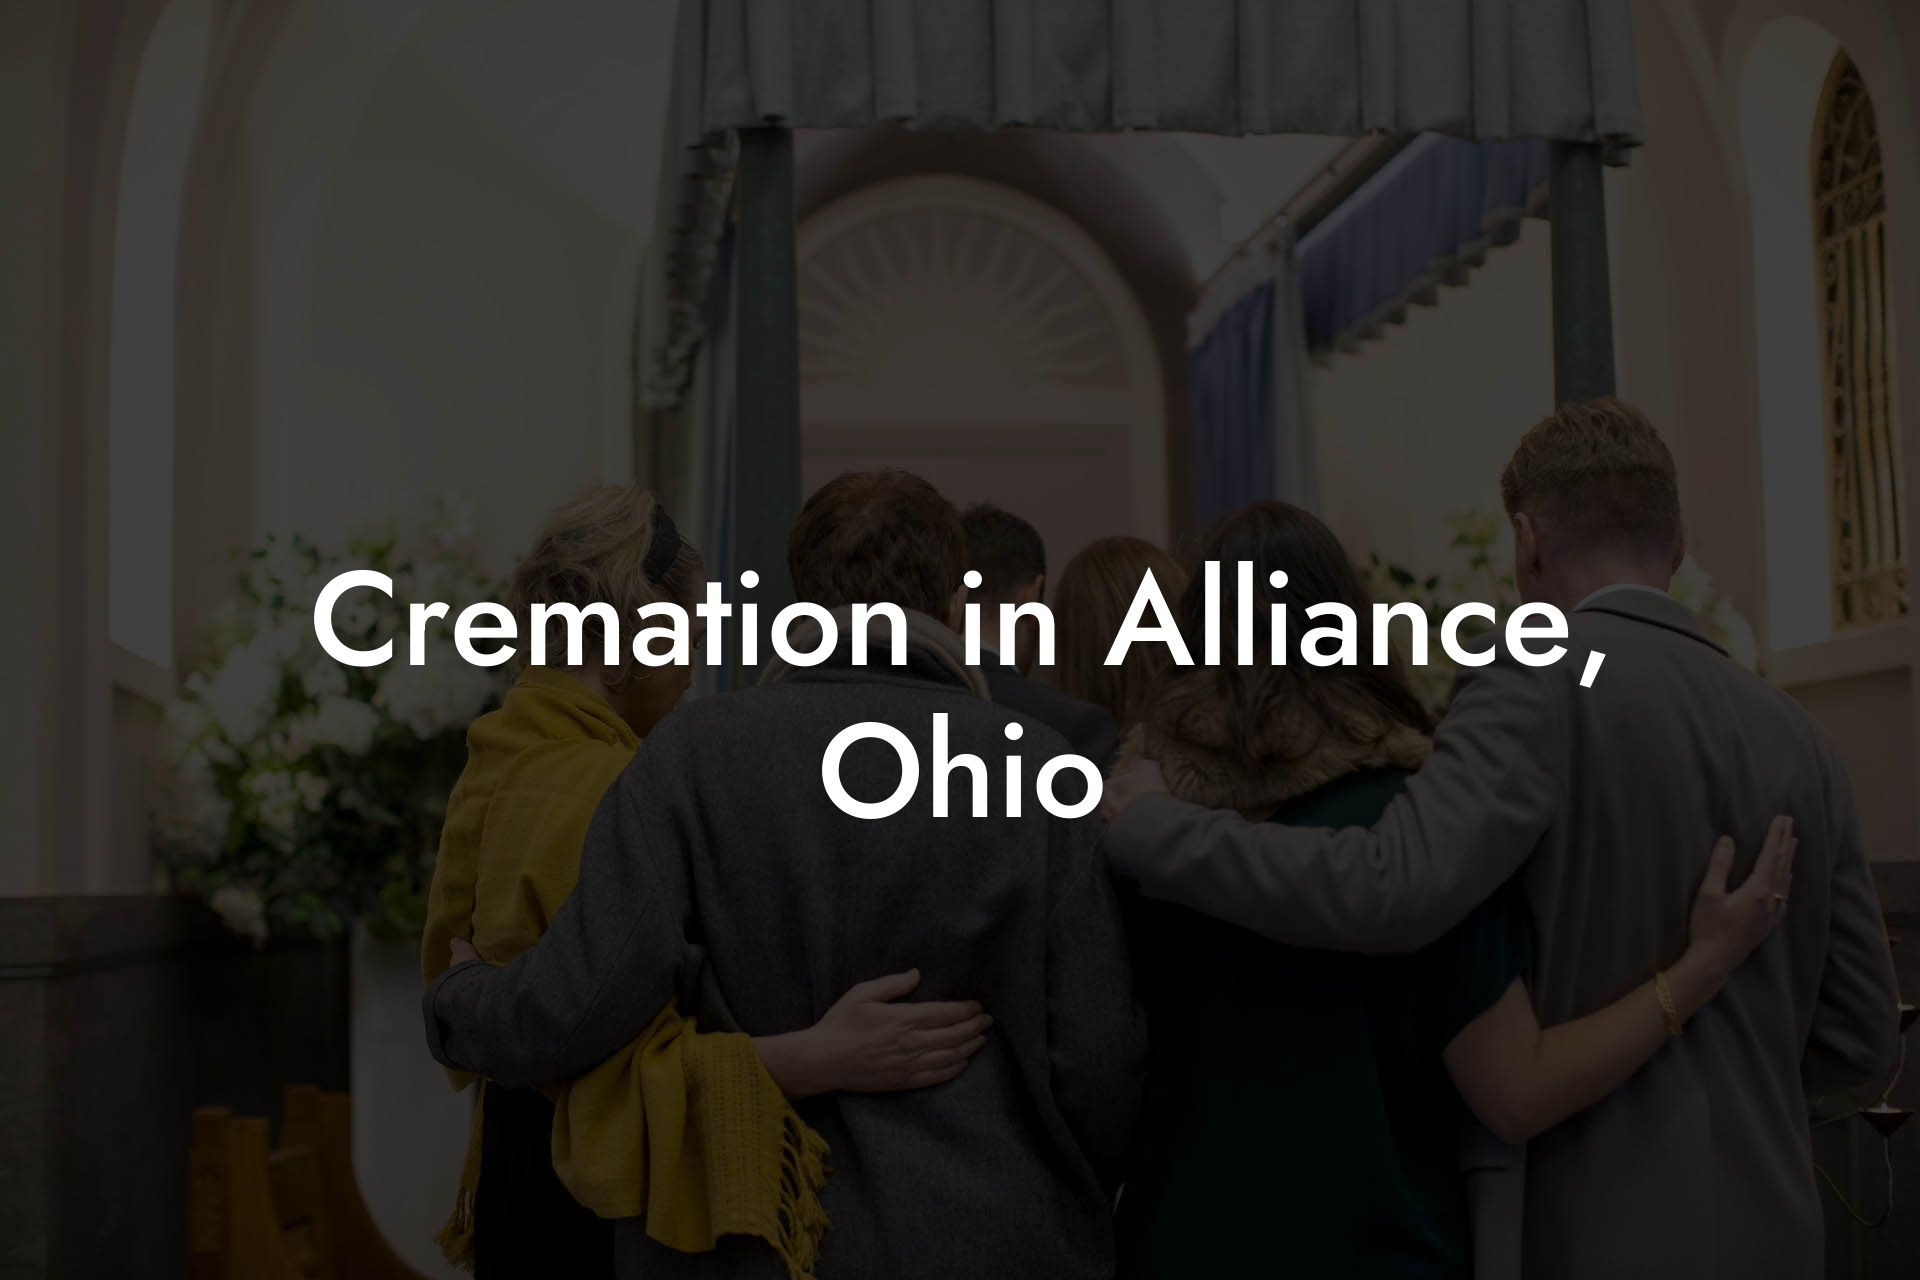 Cremation in Alliance, Ohio